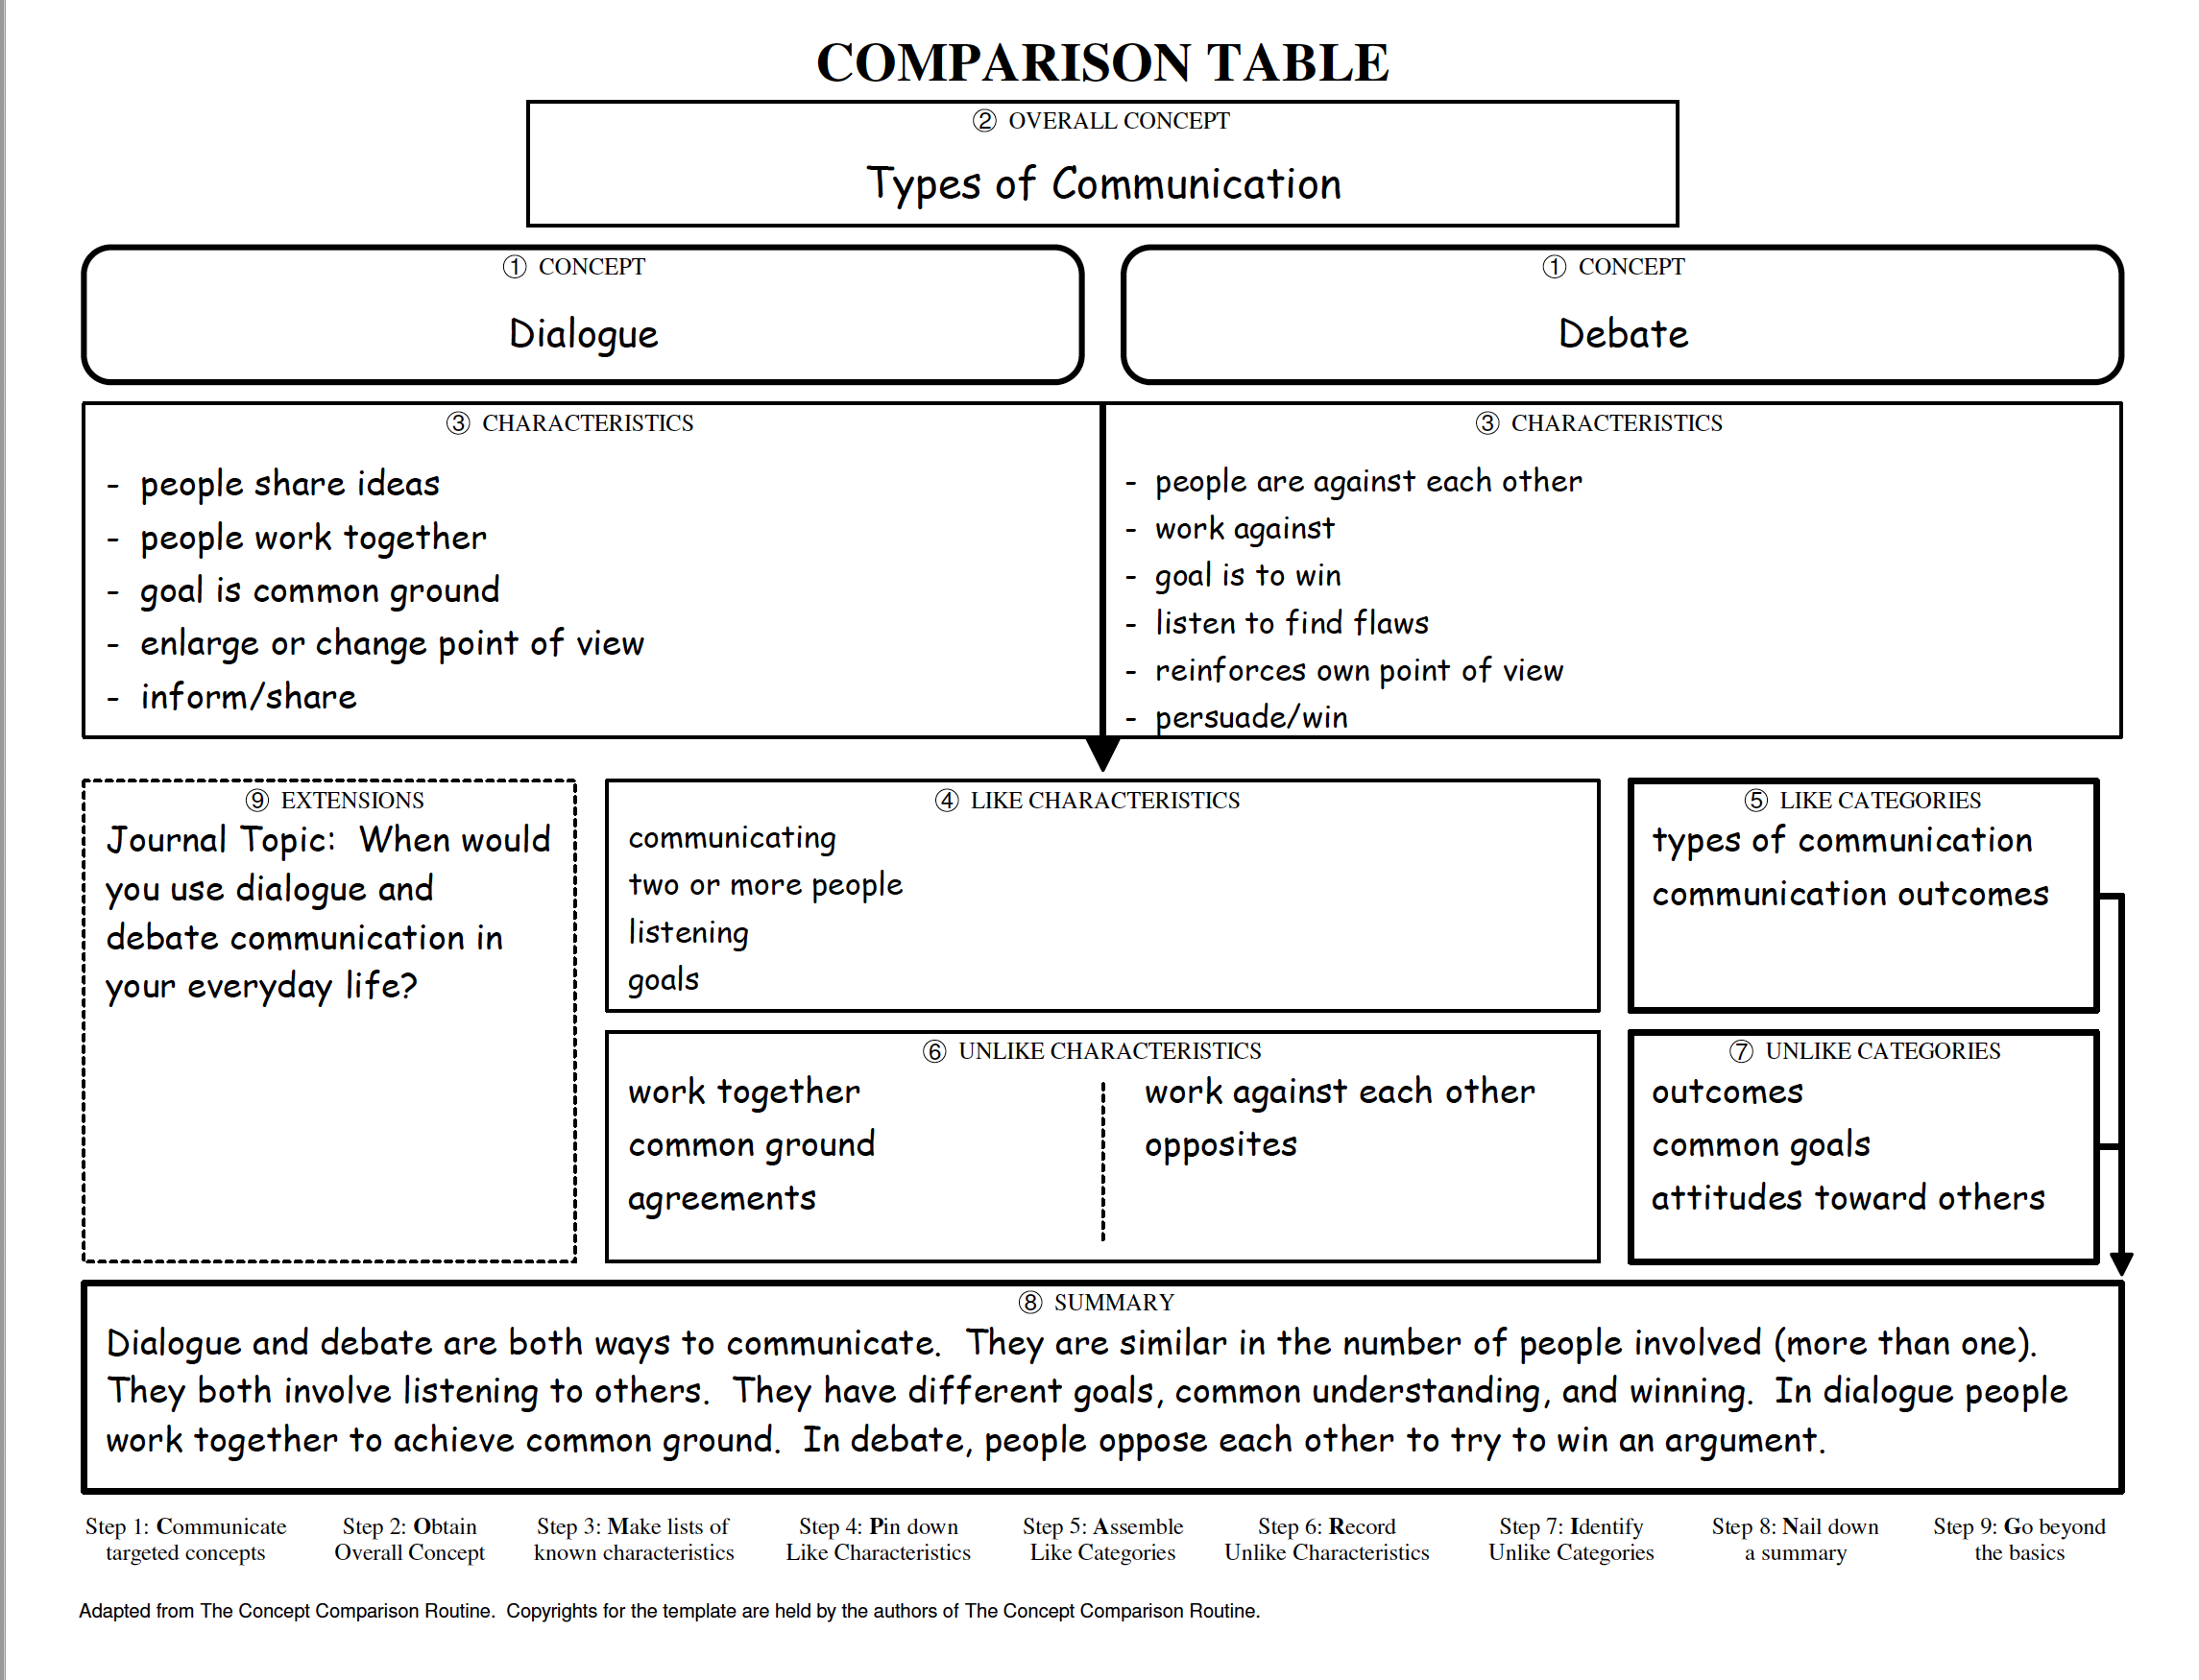 Comparison Table Dialogue vs Debate